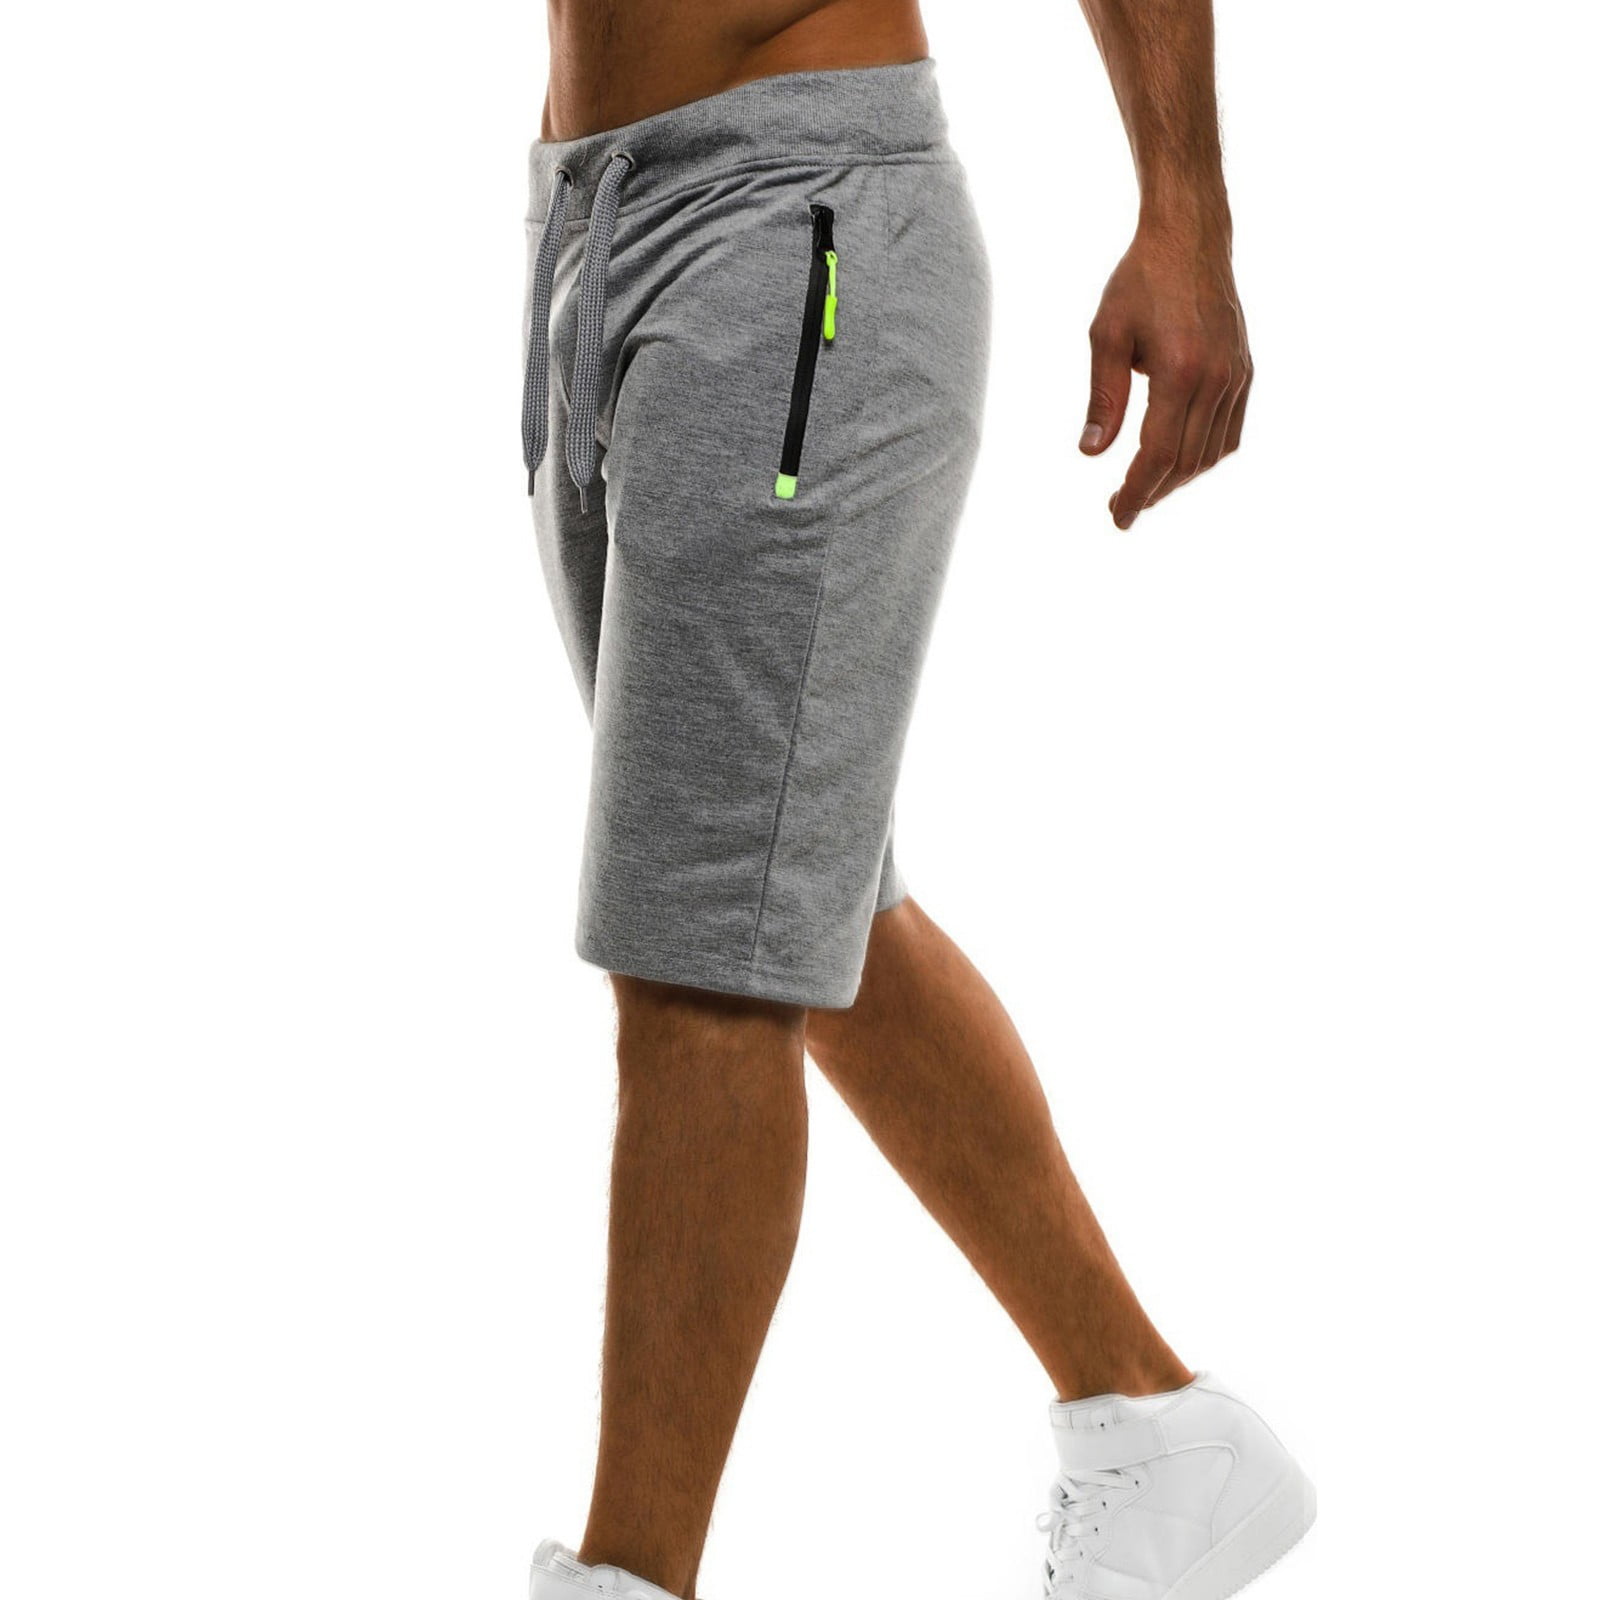 WANYNG mens pants Casual Solid Shorts Mid Waist Stretch Drawstring Sports  Shorts With Zip Pockets pants for men Gray S